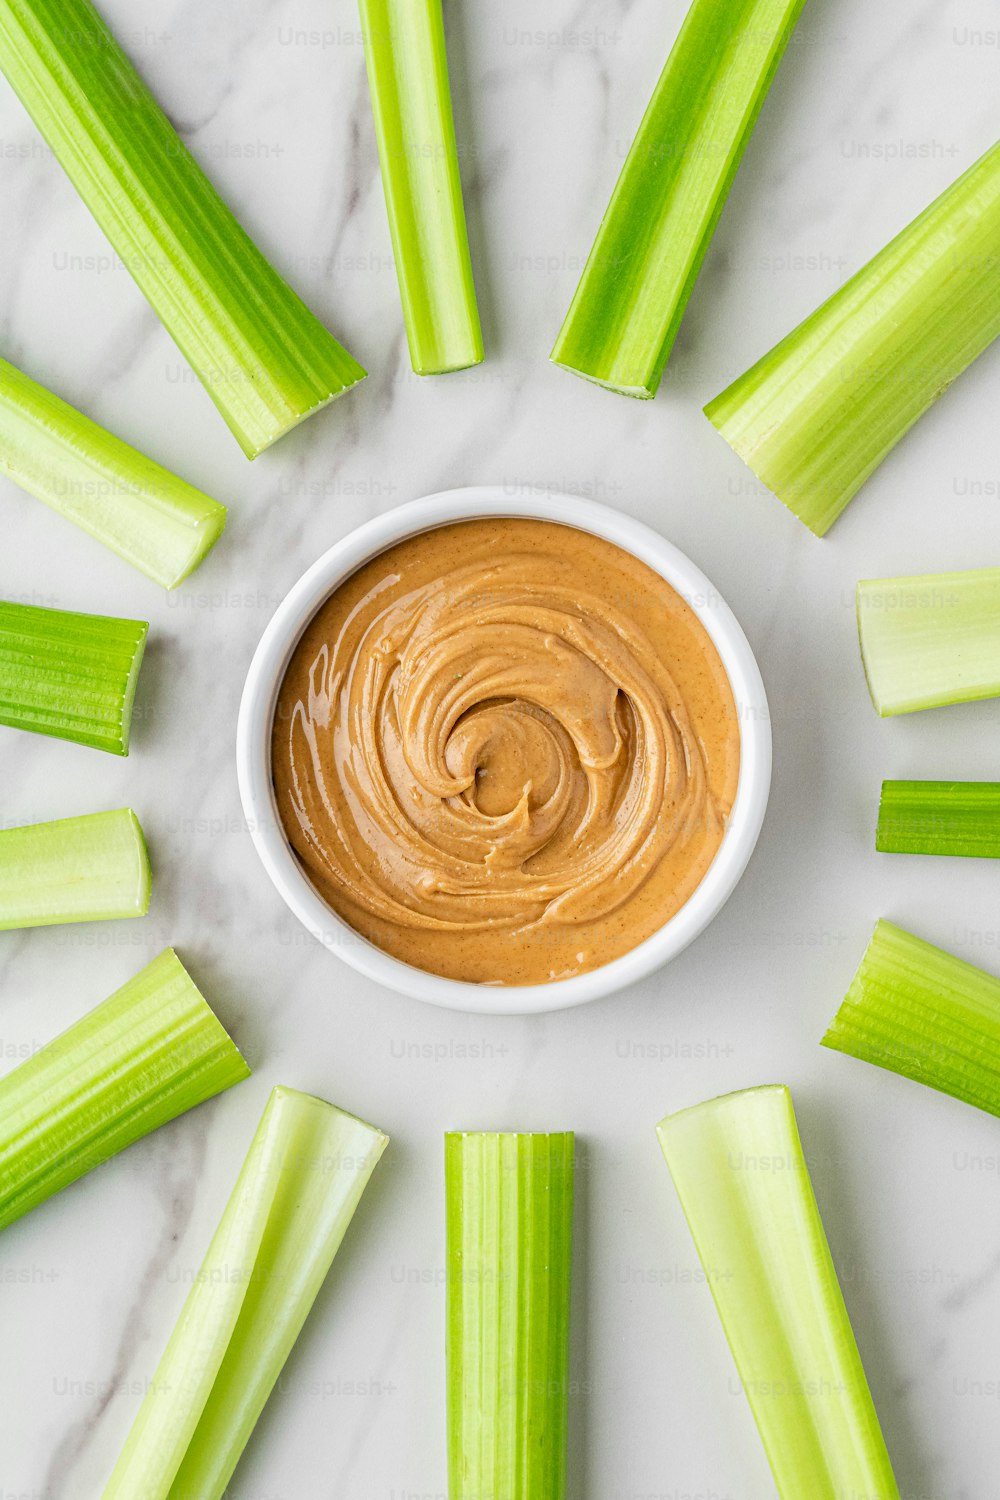 celery sticks arranged around a bowl of peanut butter